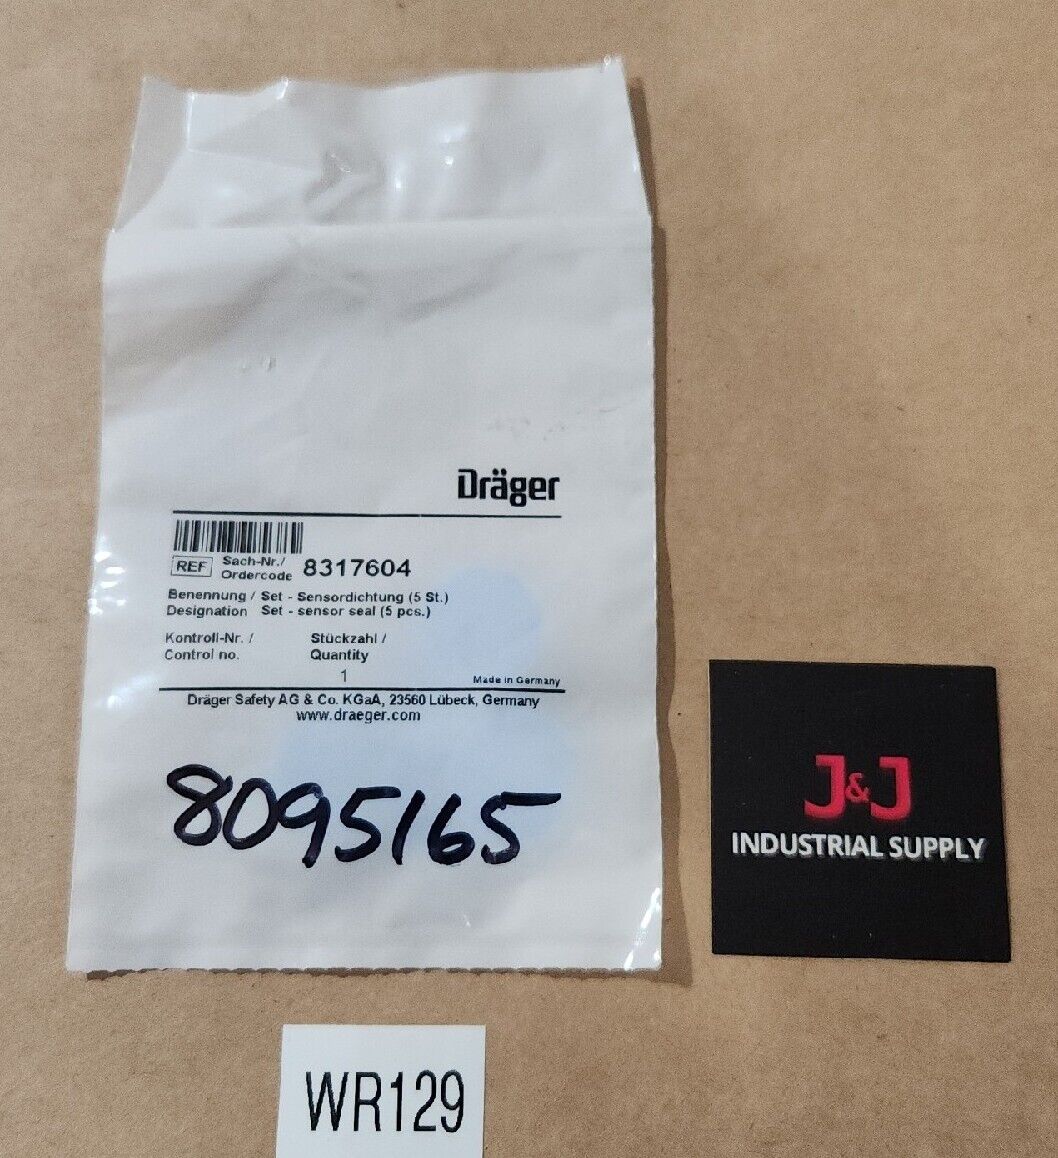 *FACTORY SEALED* Dräger 8317604 Sensor Sealing Kit Set 5 pcs + Warranty